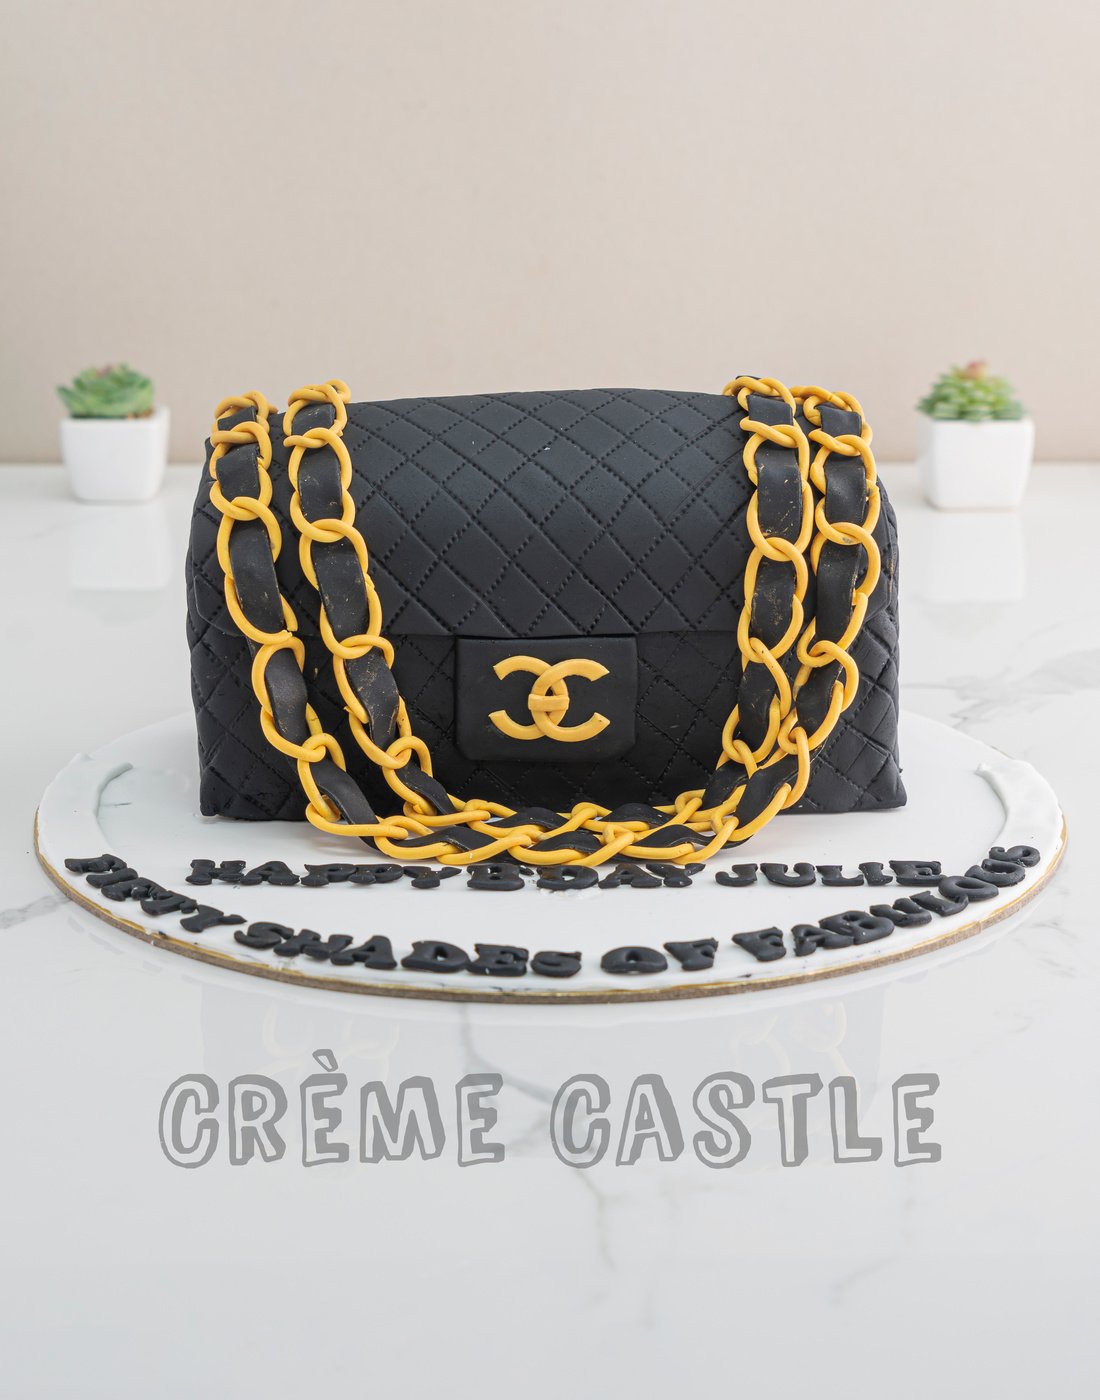 CHANEL BAG CAKE  How to Make Chanel Bag Cake  Mami Glai Cakes  YouTube